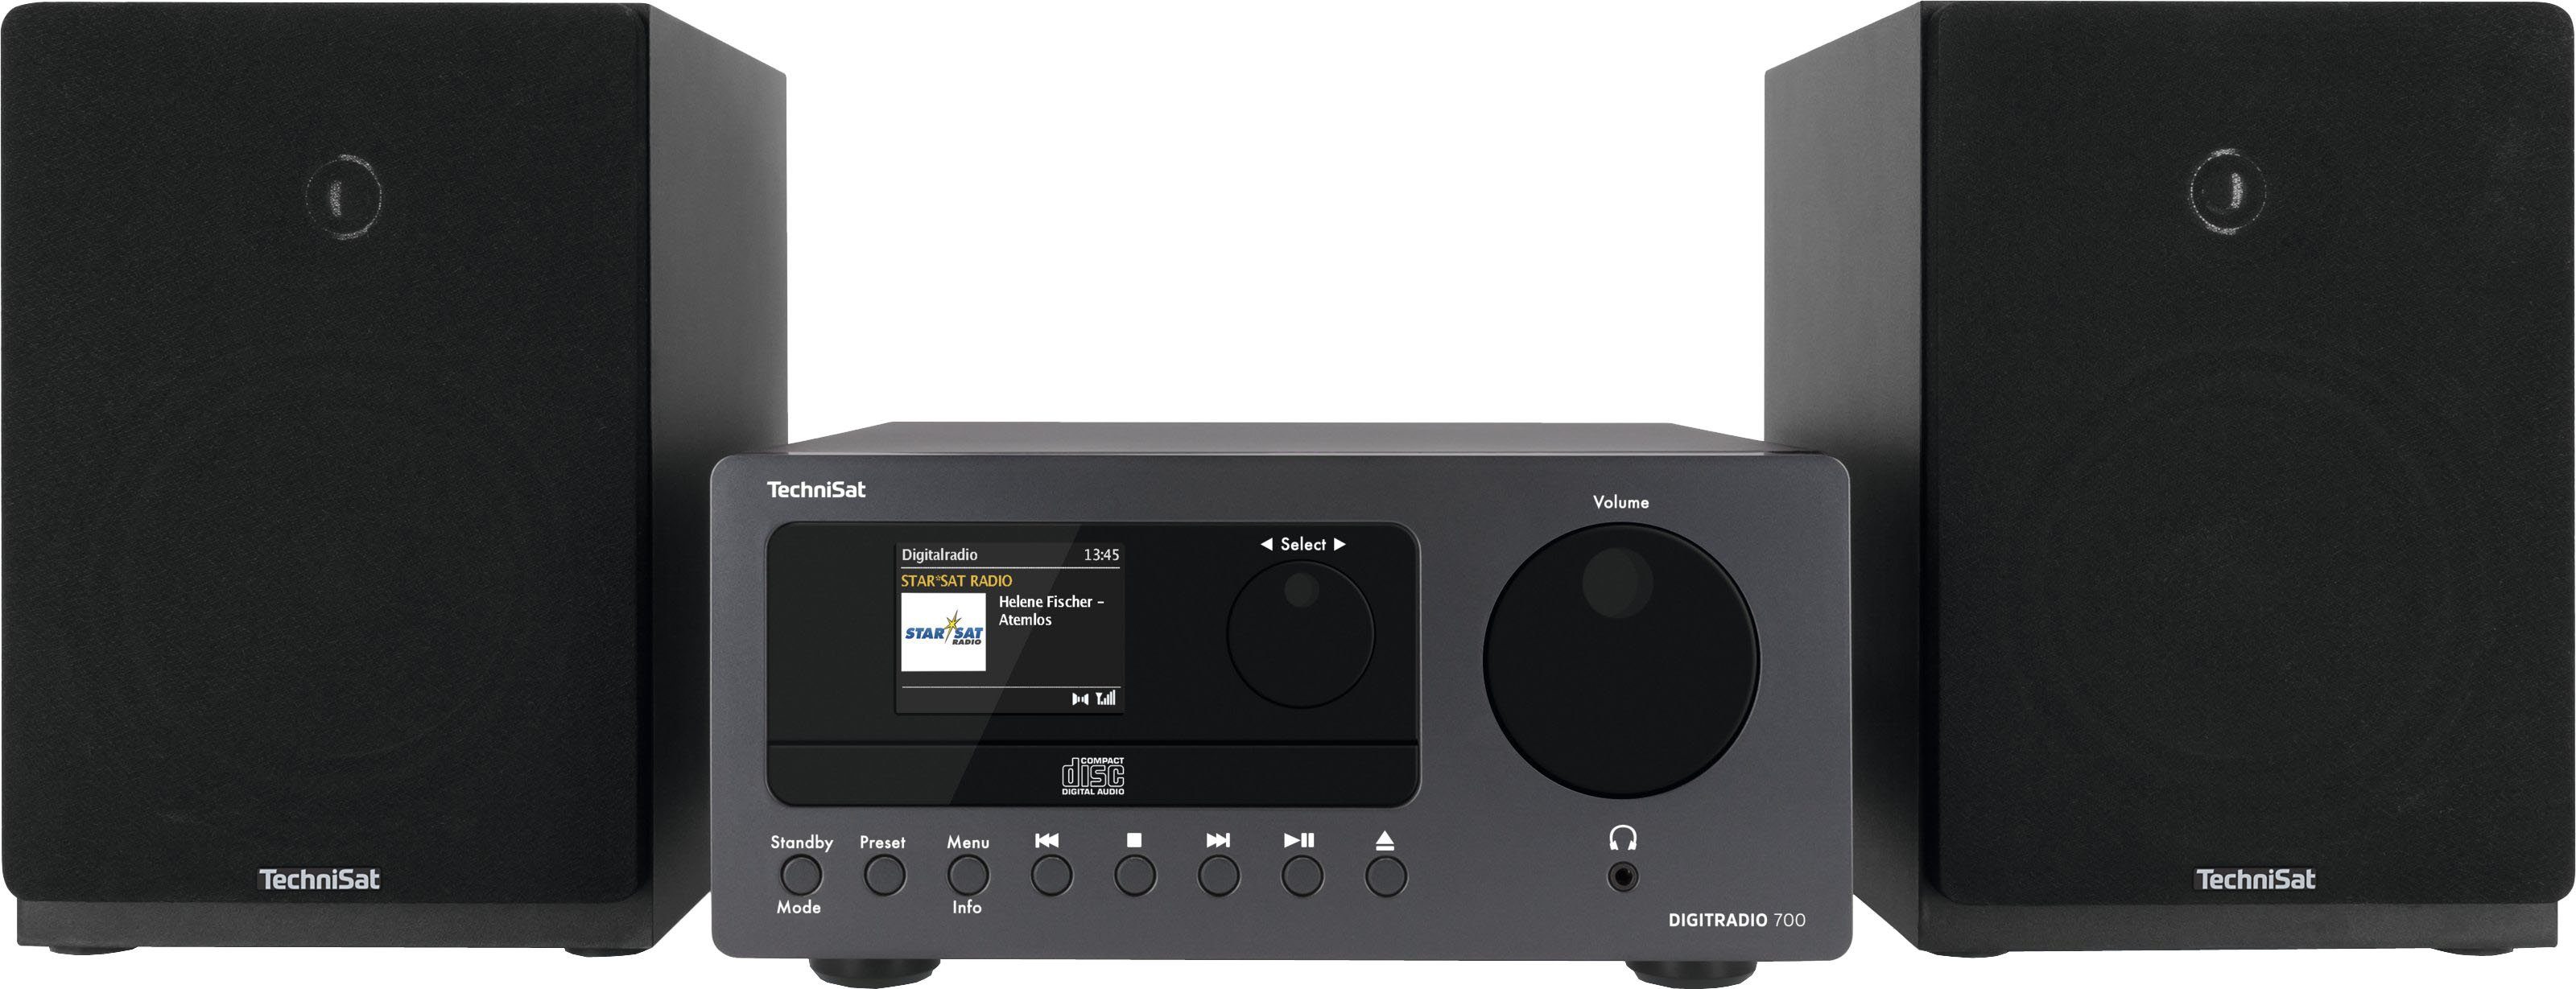 Stereo- UKW (DAB), TechniSat 40 mit Microanlage 700 (Digitalradio W) RDS, Internetradio, DIGITRADIO